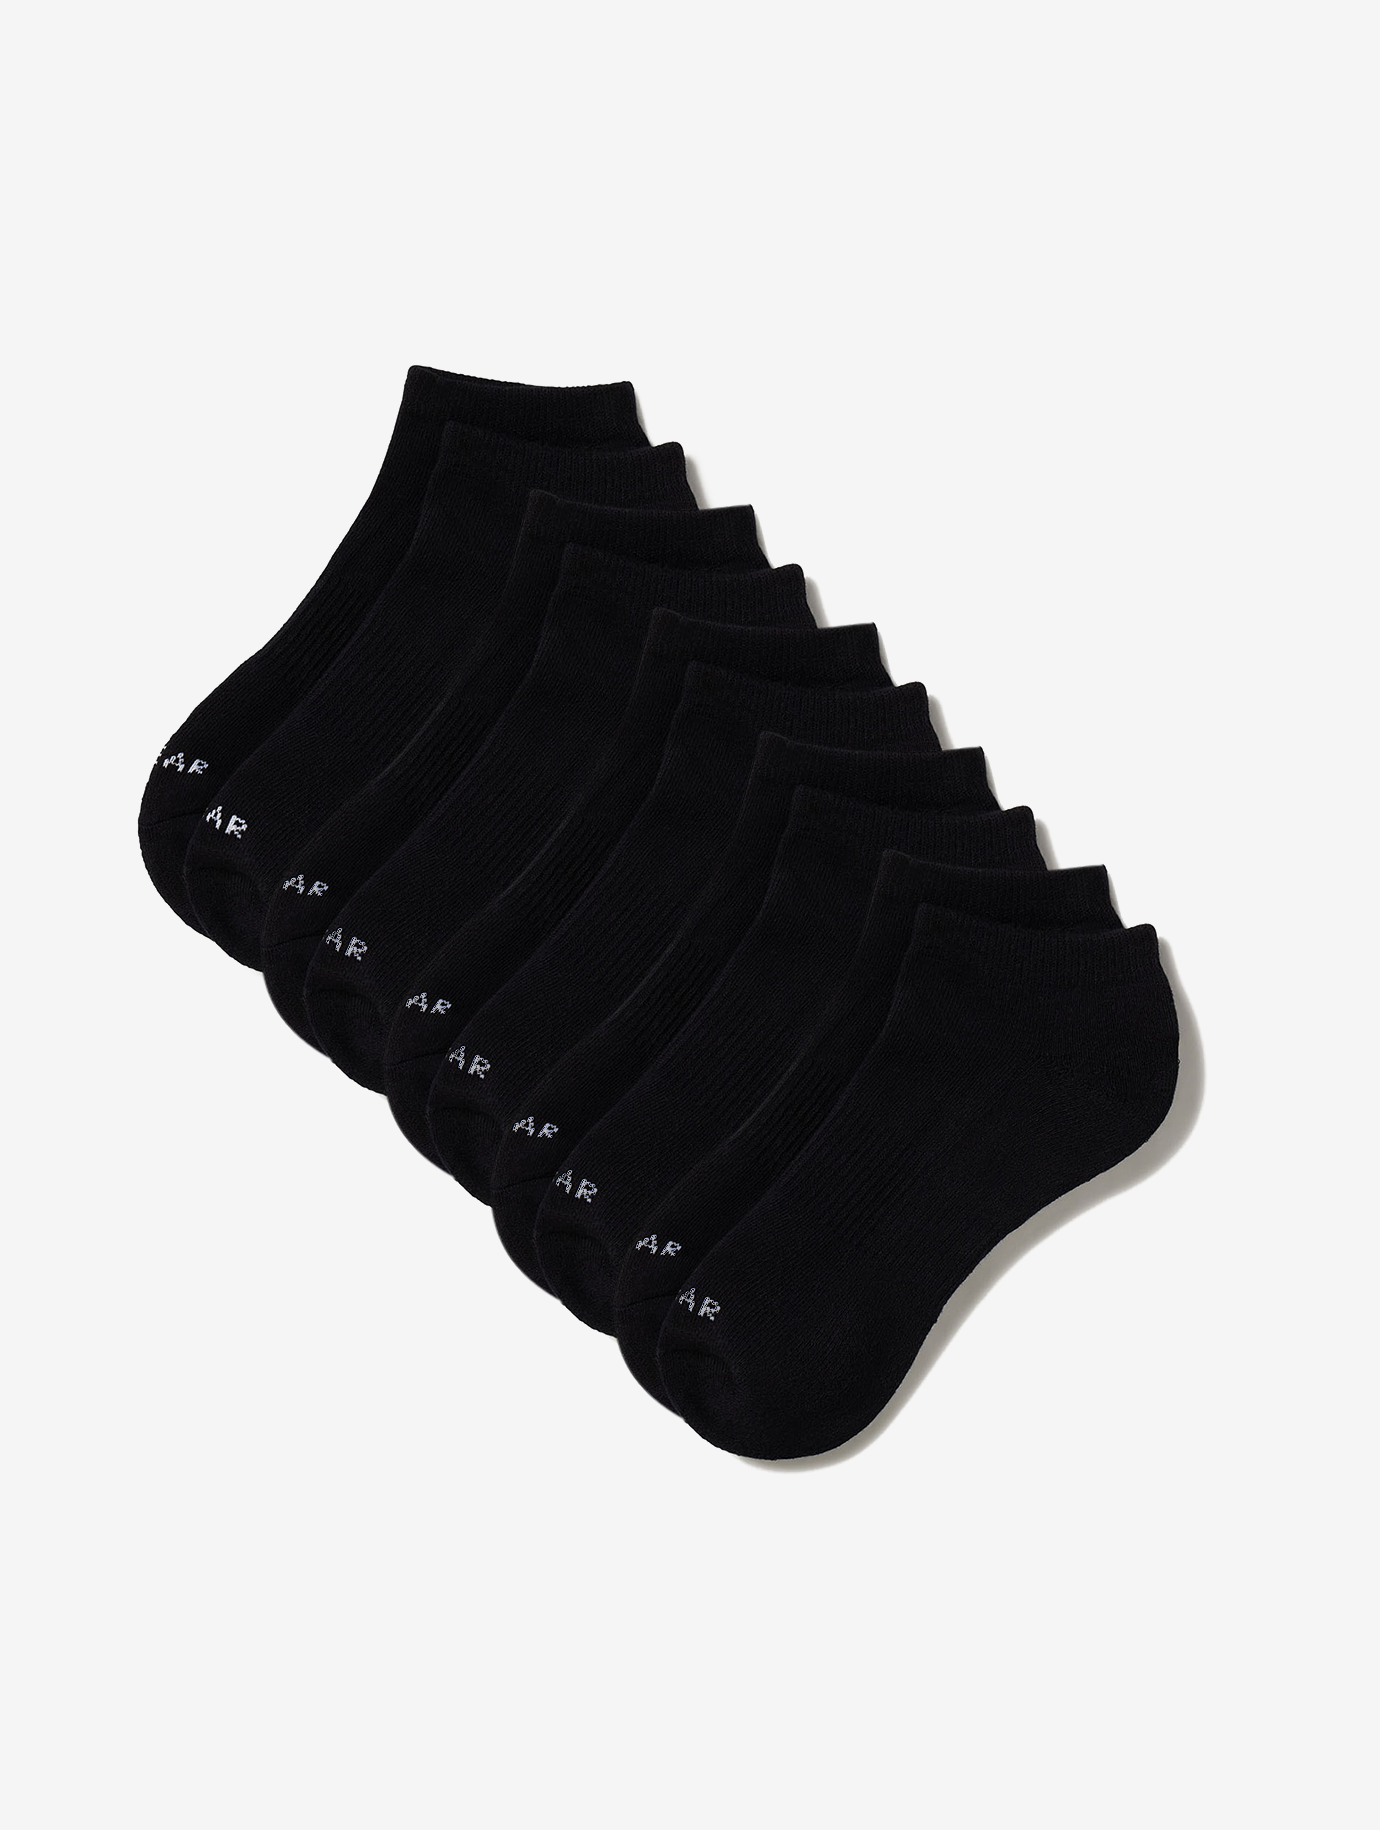 Allwear Organic Ankle Socks 5 Pack Bundle